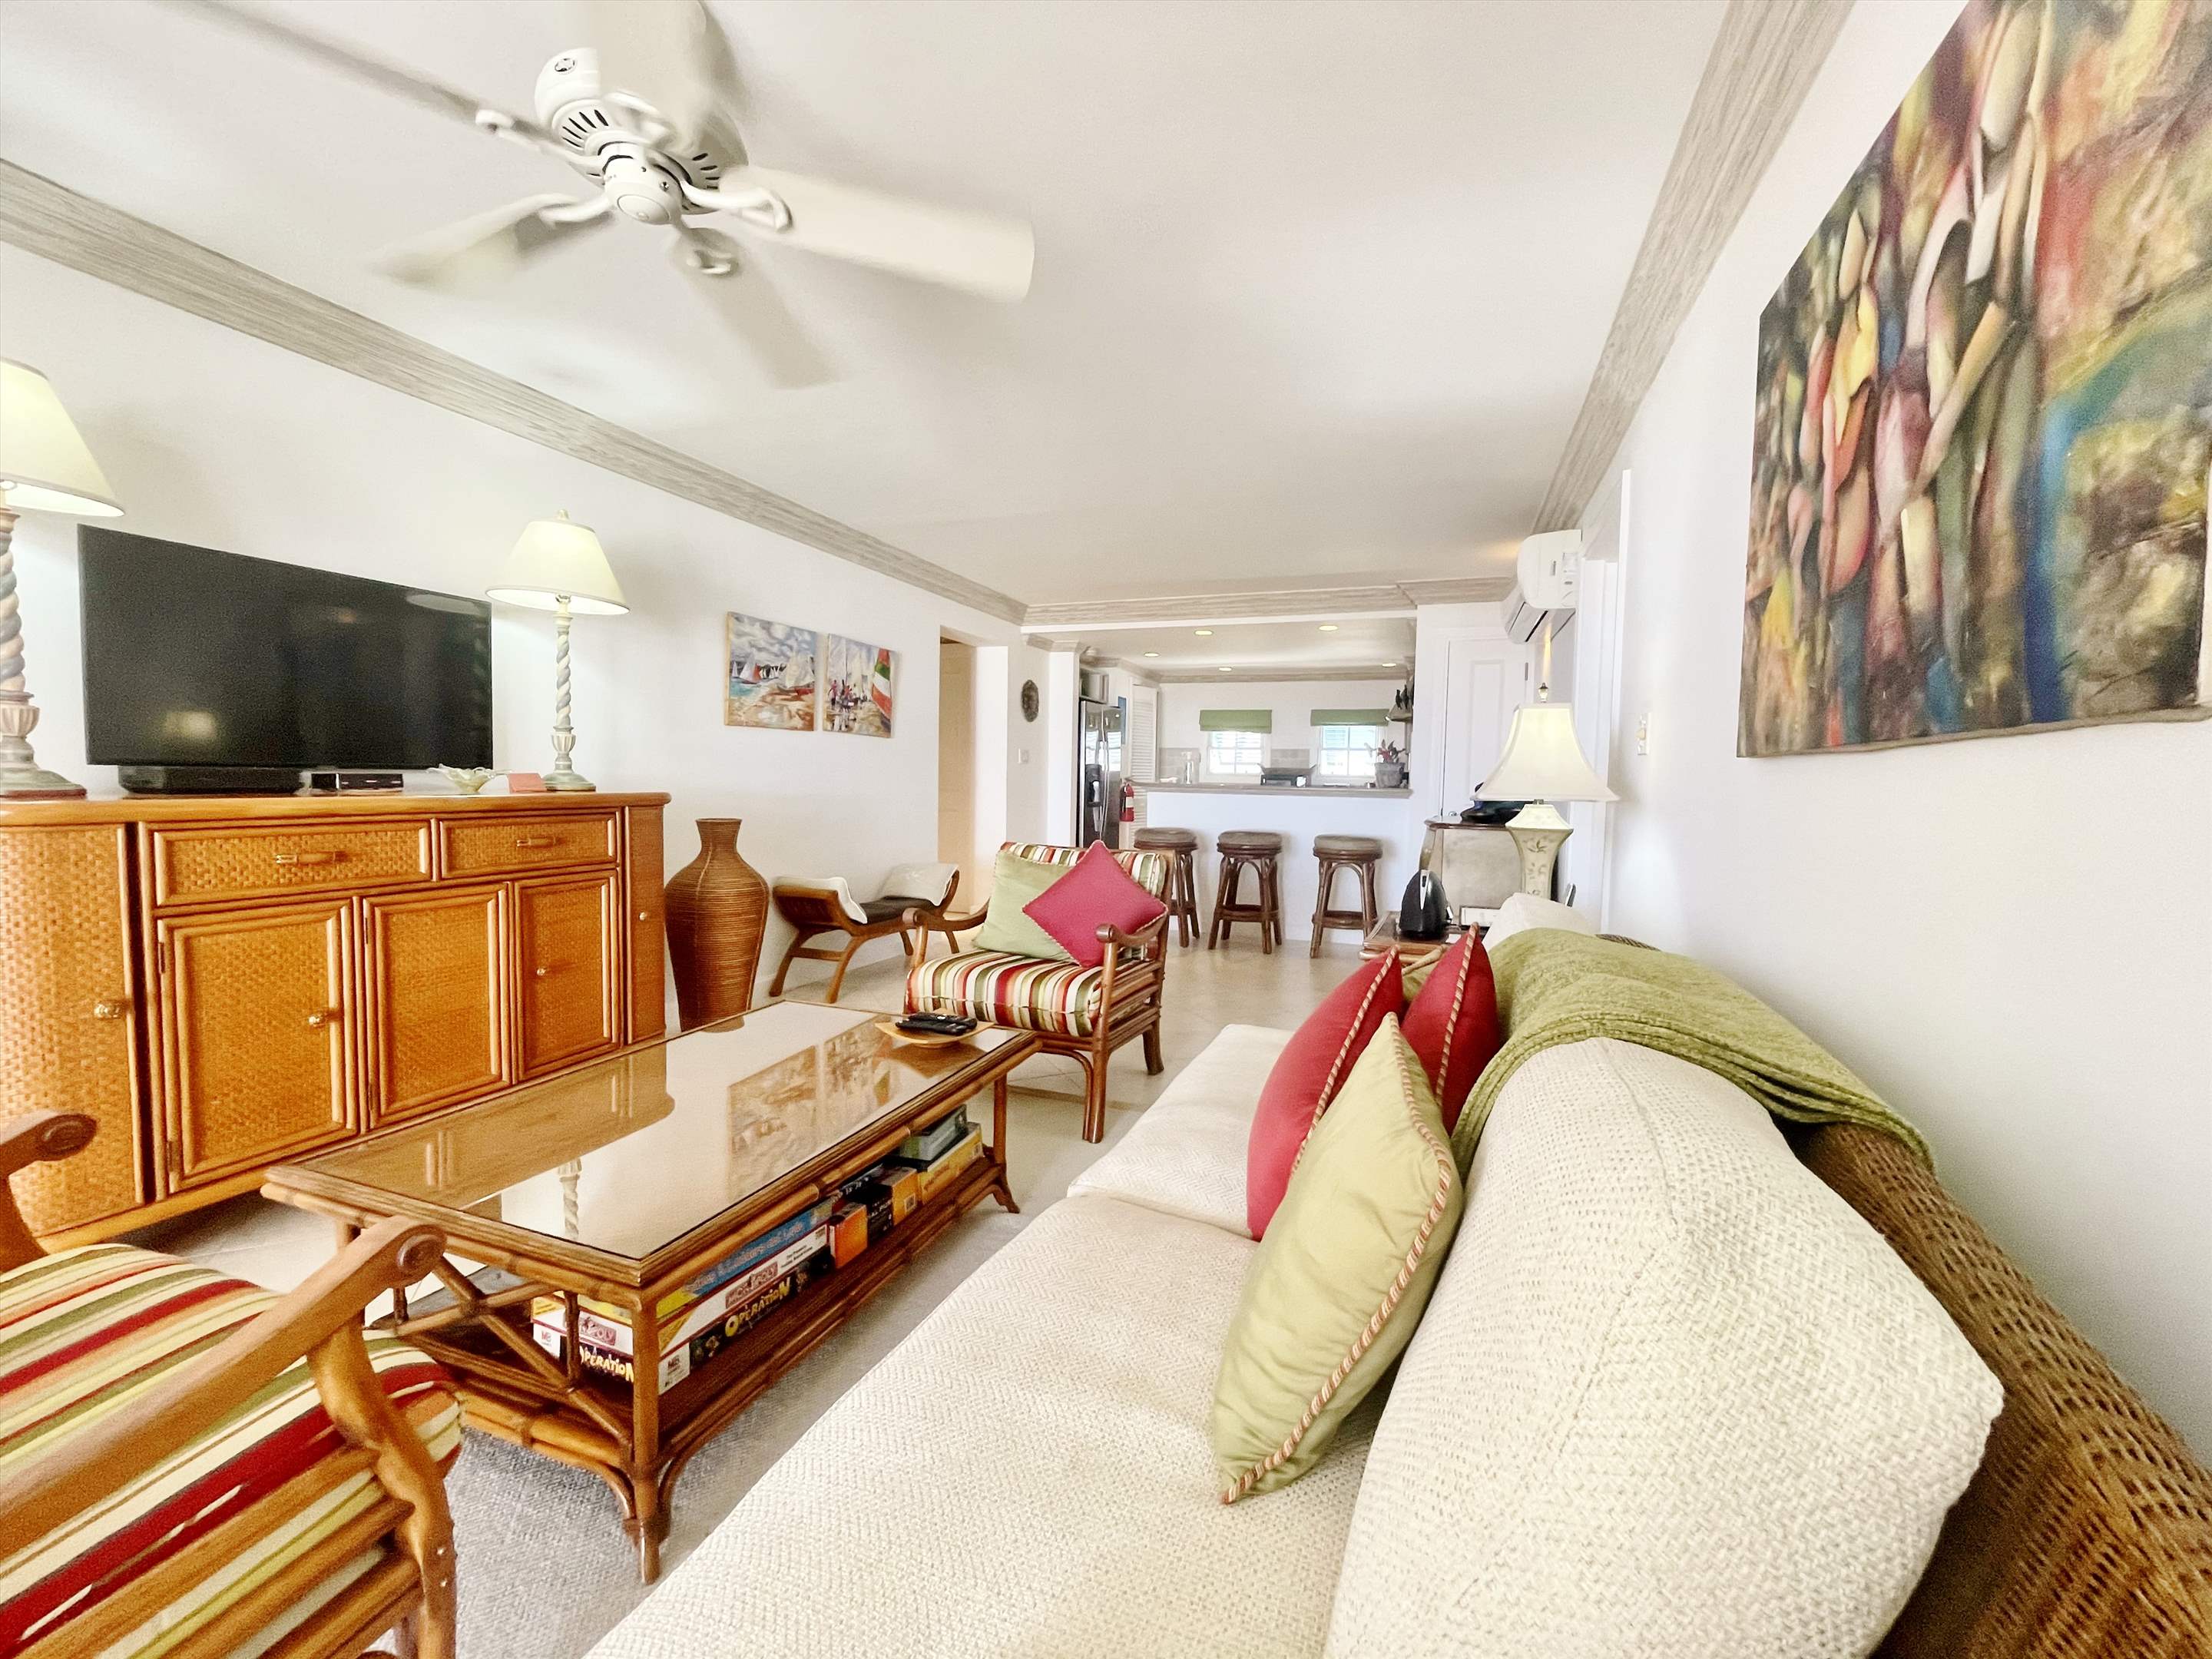 Villas on the Beach 101, 2 bedroom, 2 bedroom apartment in St. James & West Coast, Barbados Photo #7